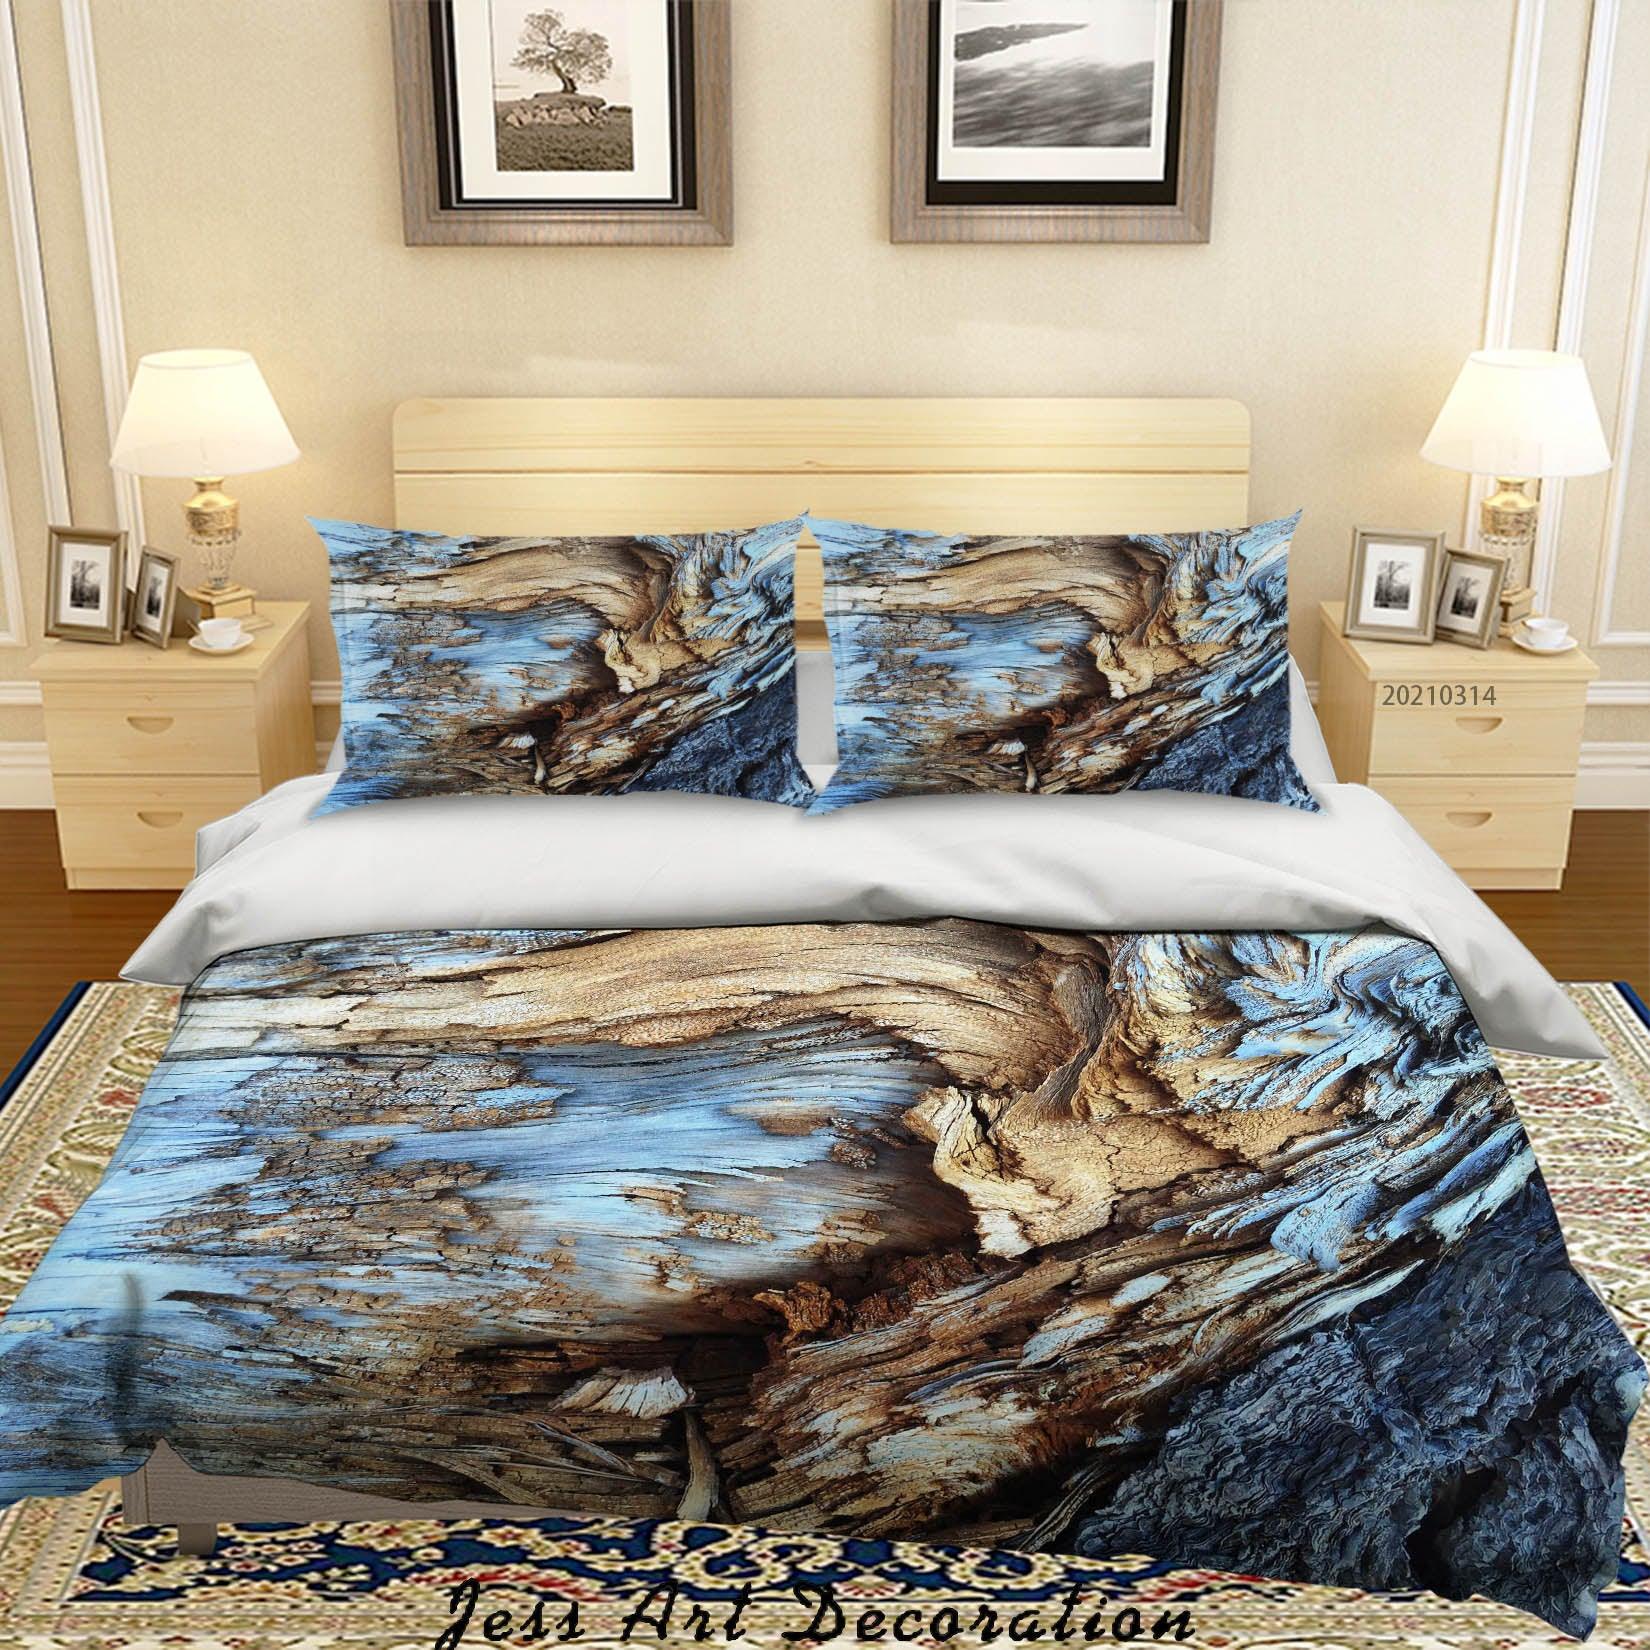 3D Abstract Blue Marble Pattern Quilt Cover Set Bedding Set Duvet Cover Pillowcases 126- Jess Art Decoration